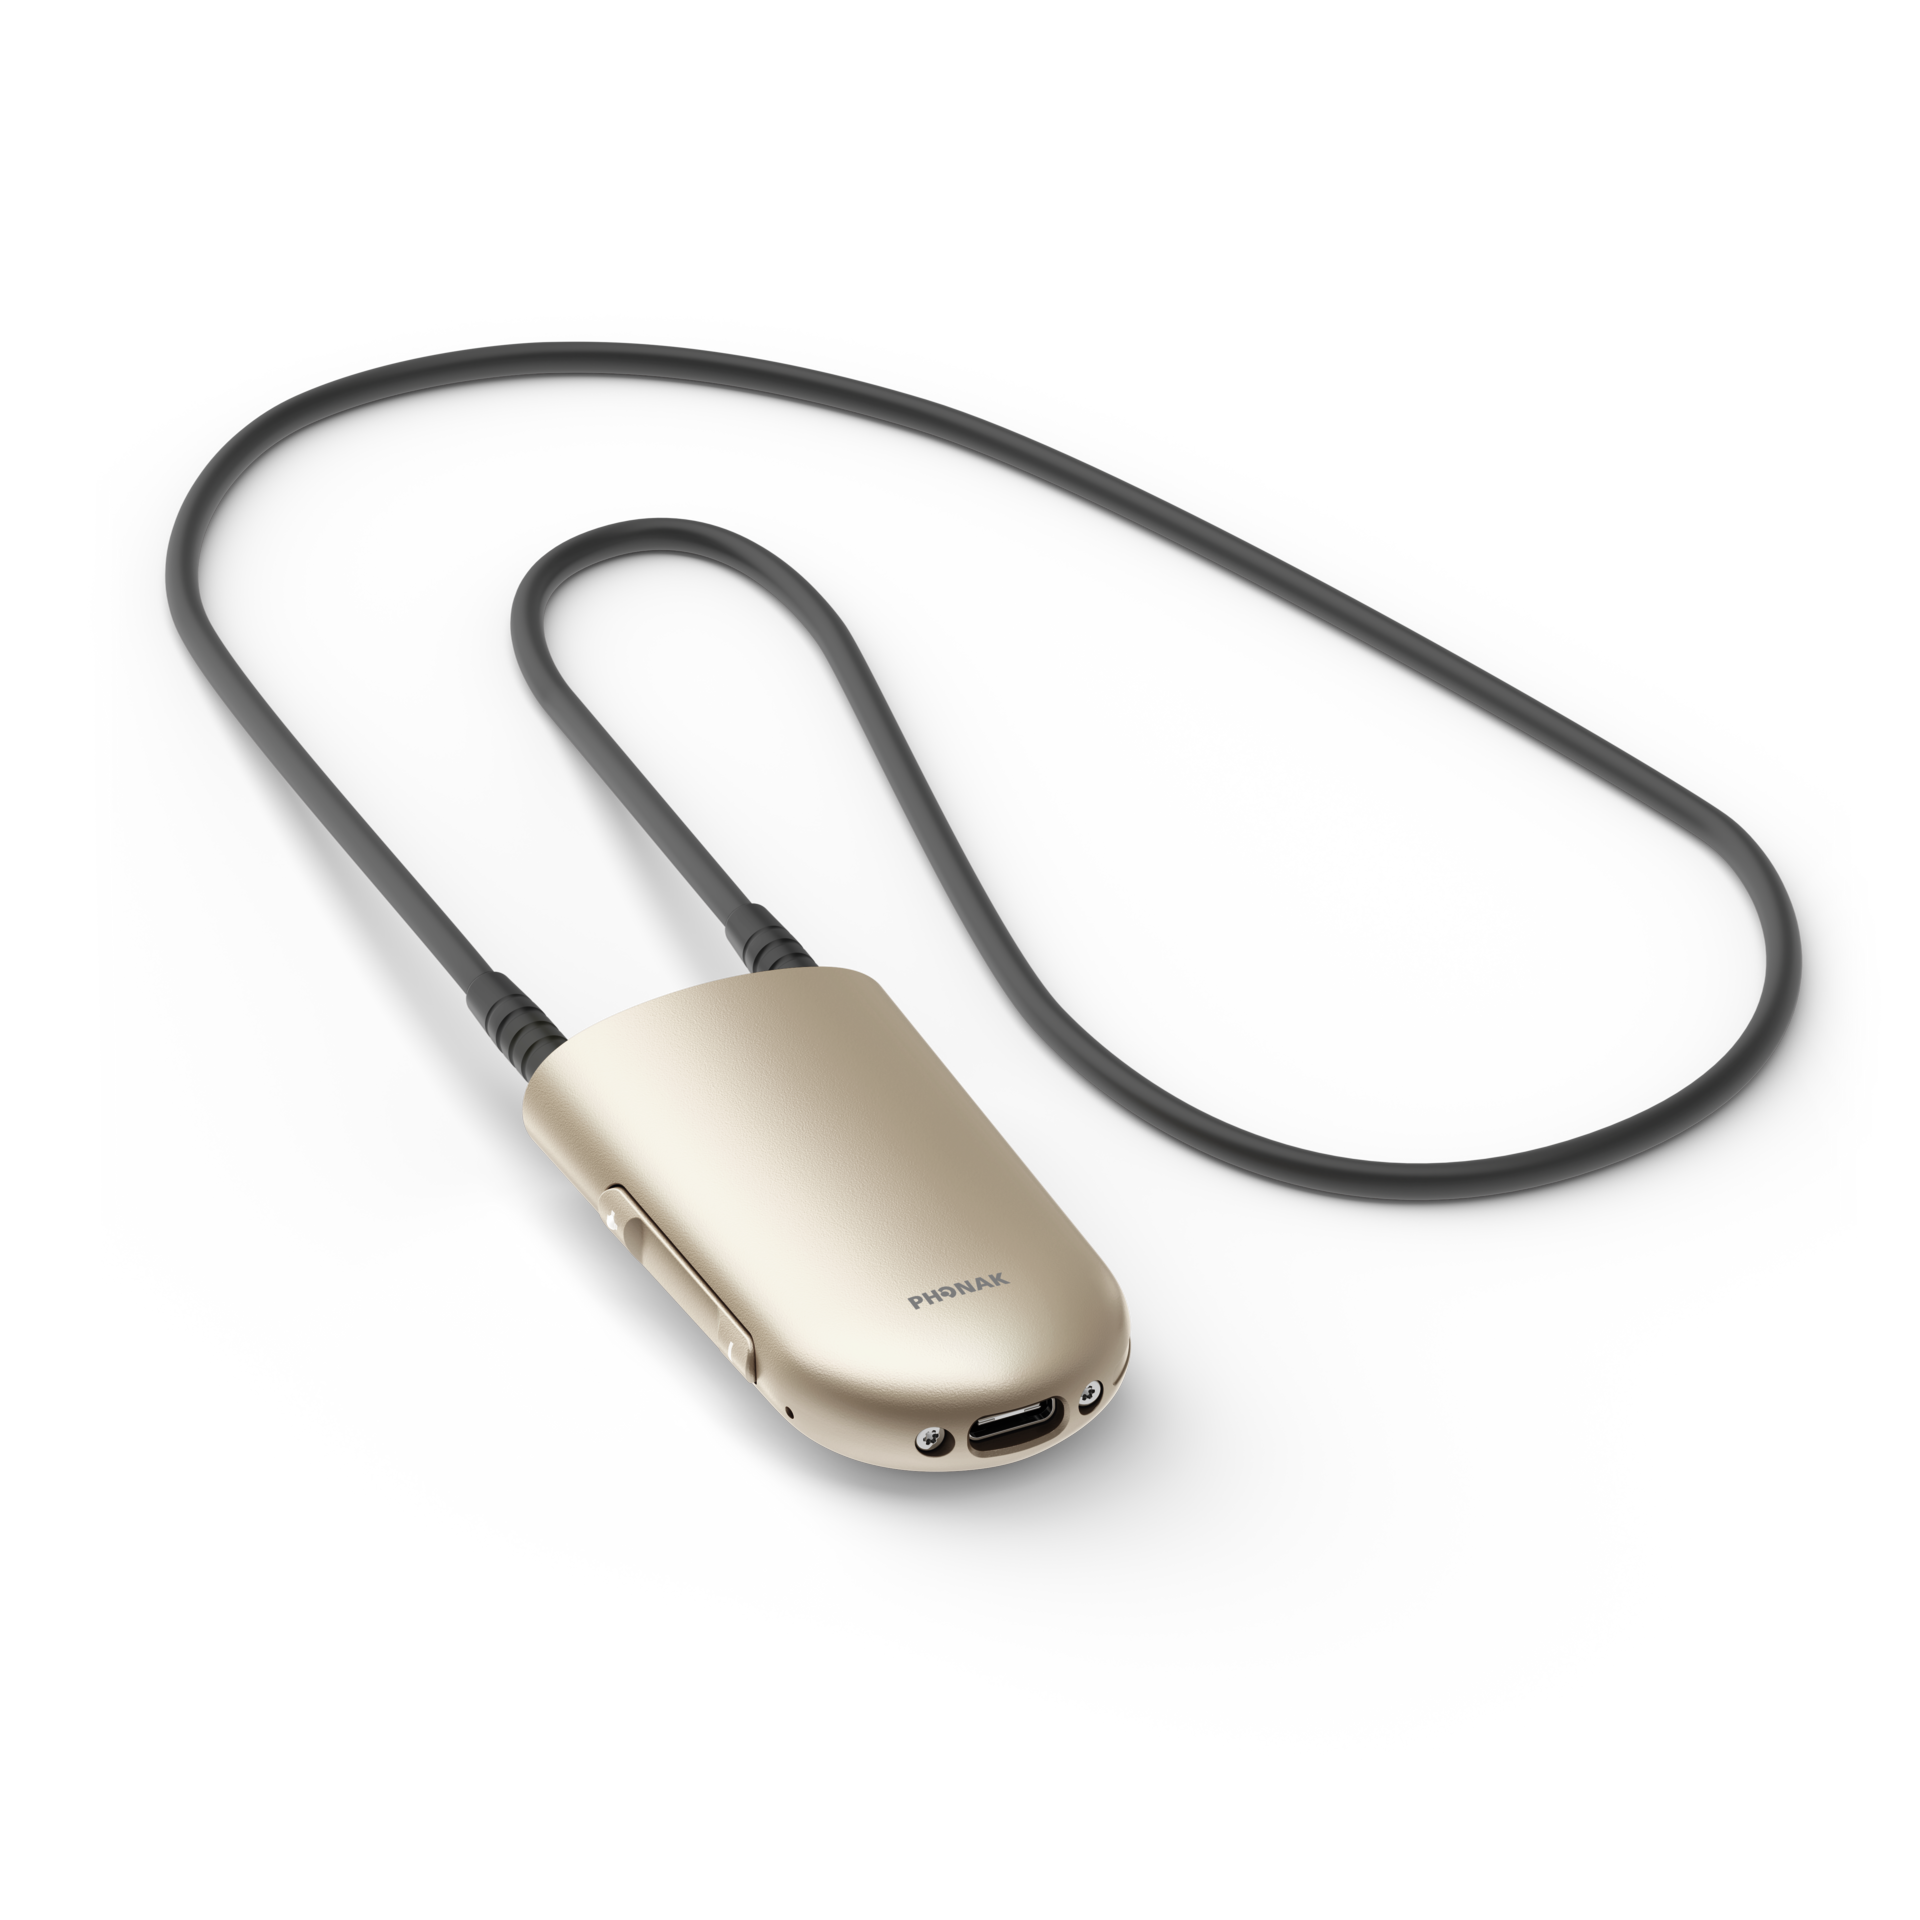 Phonak Roger Neckloop hearing aid receiver necklace.